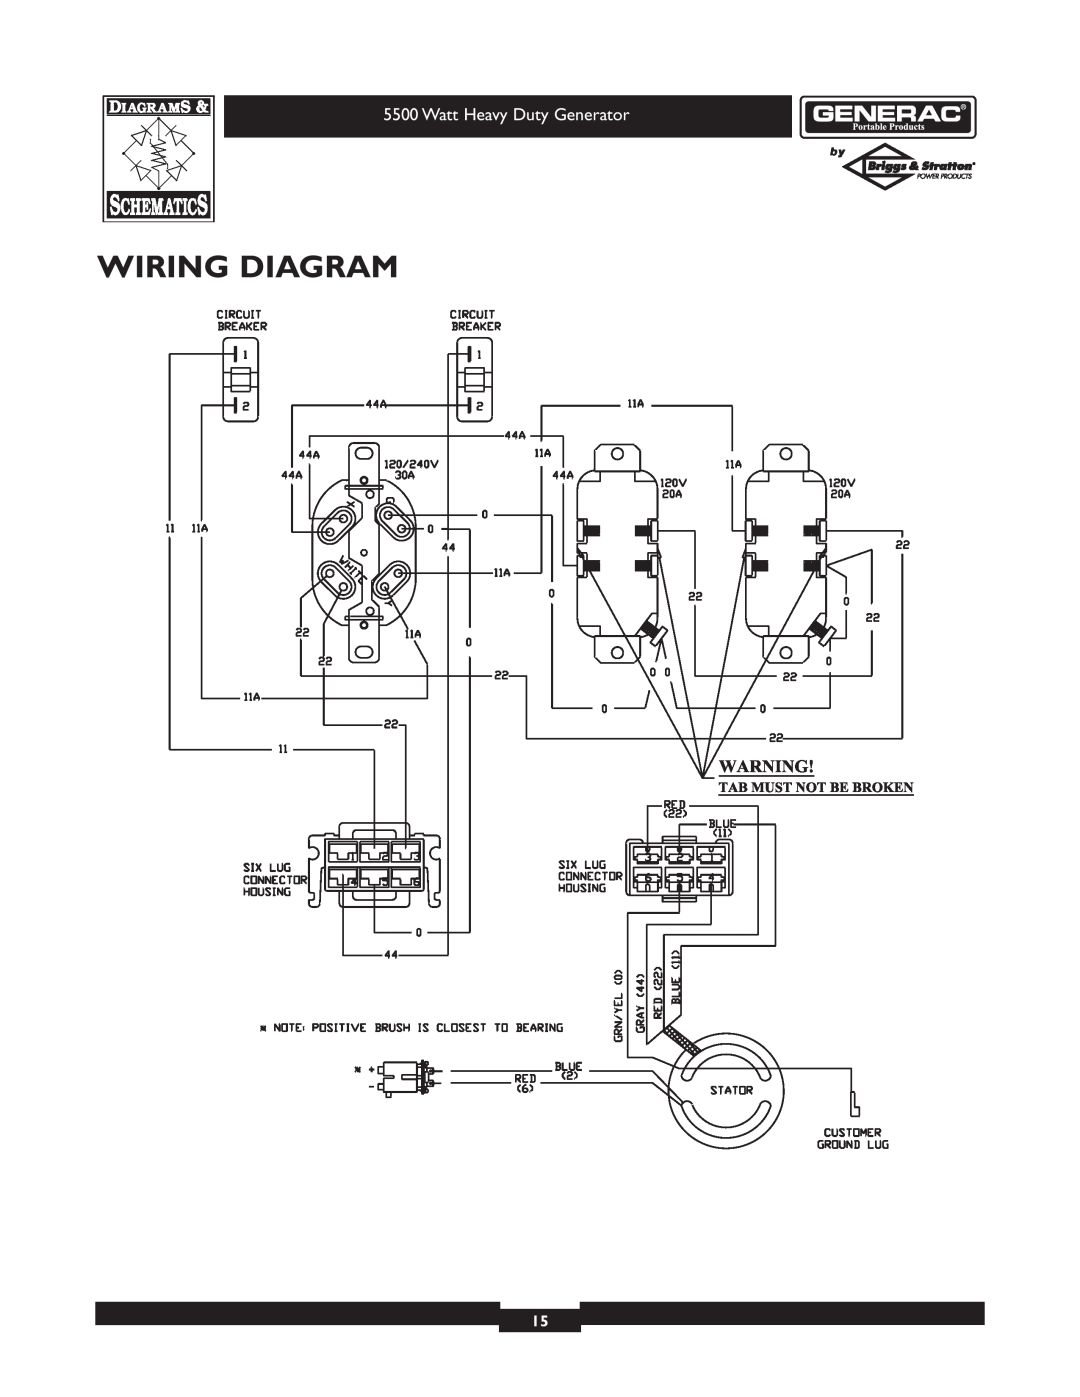 Generac 1654-0 owner manual Wiring Diagram, Watt Heavy Duty Generator 